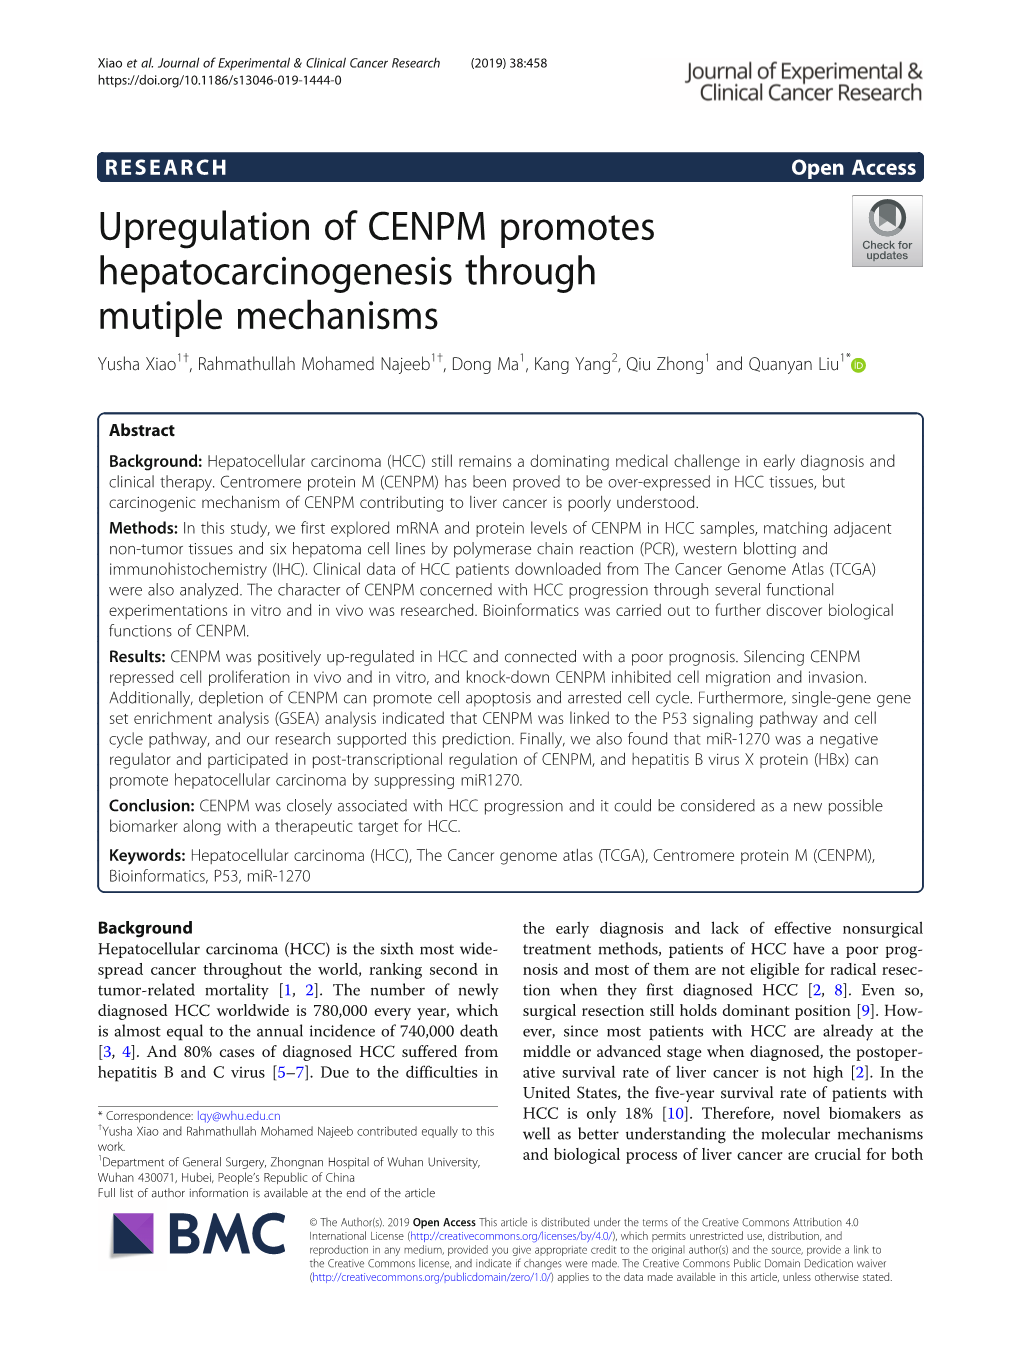 Upregulation of CENPM Promotes Hepatocarcinogenesis Through